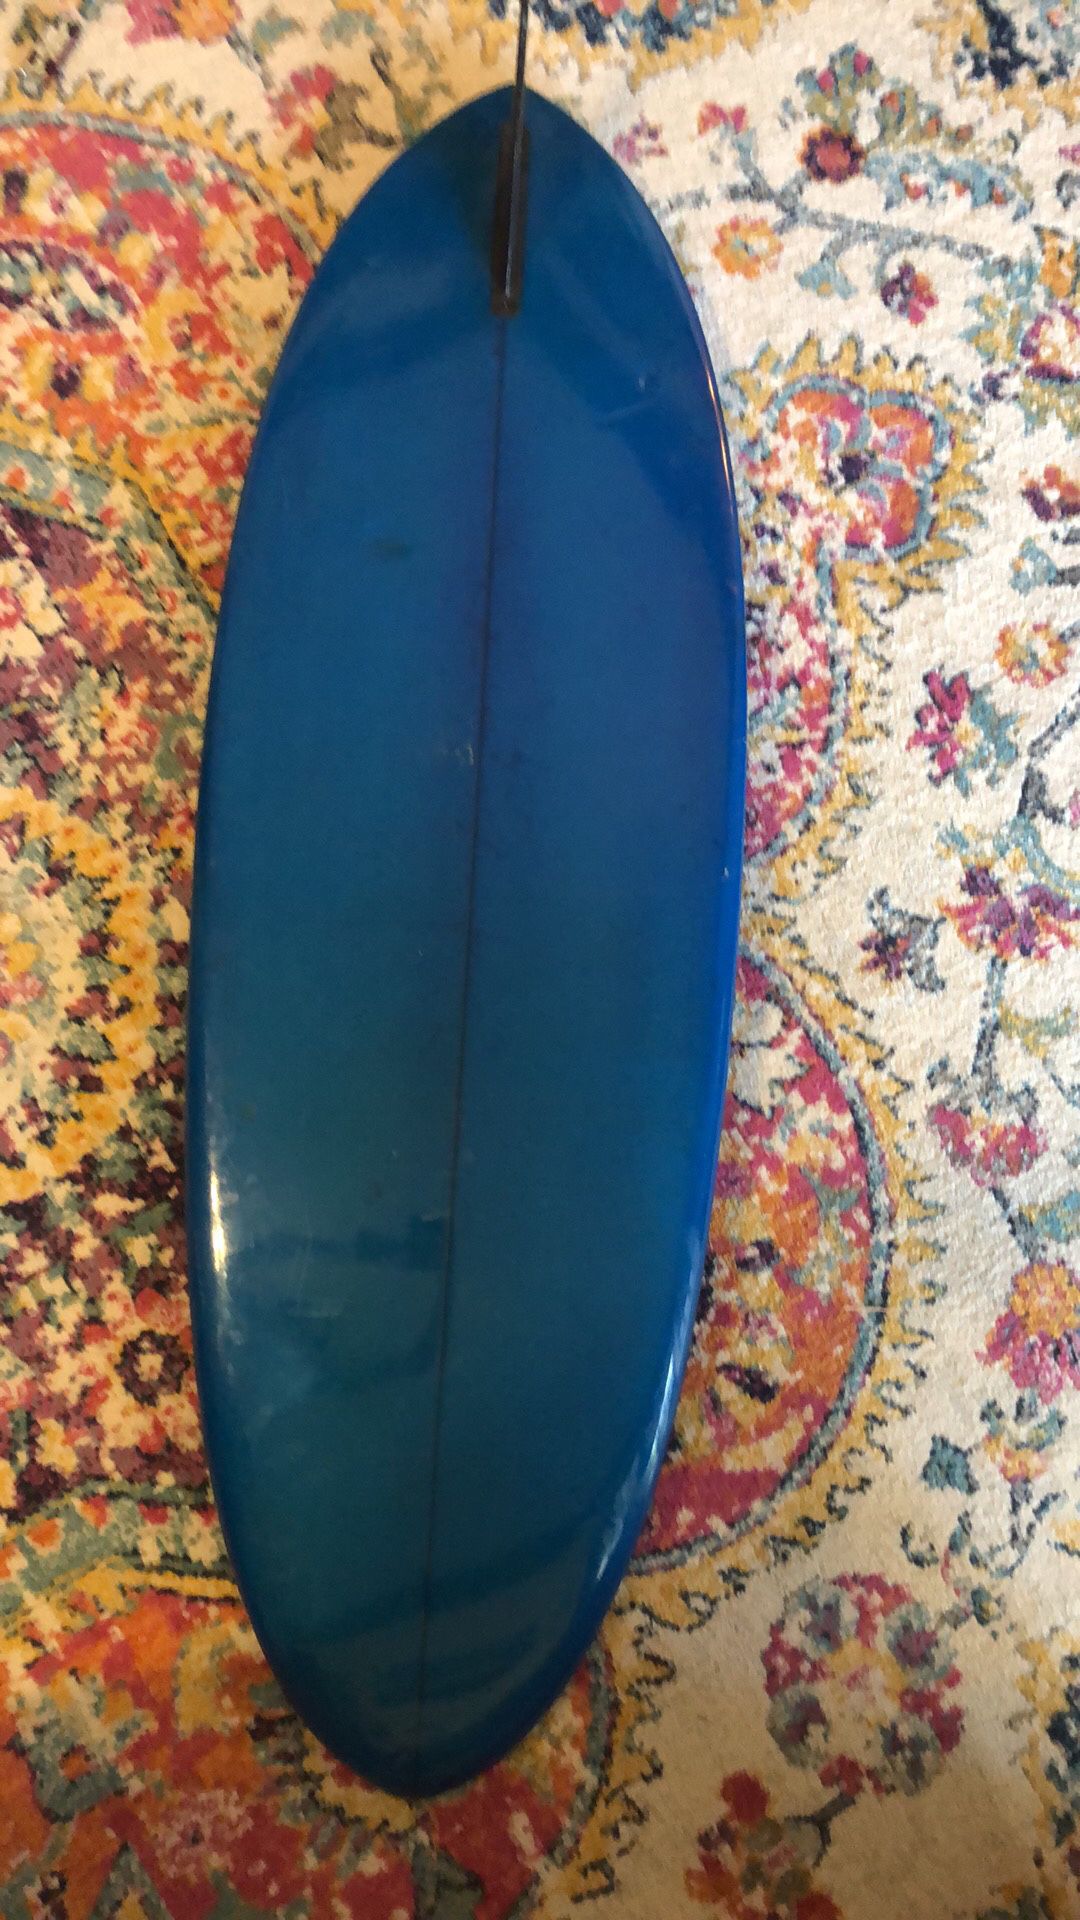 Vintage surfboard 